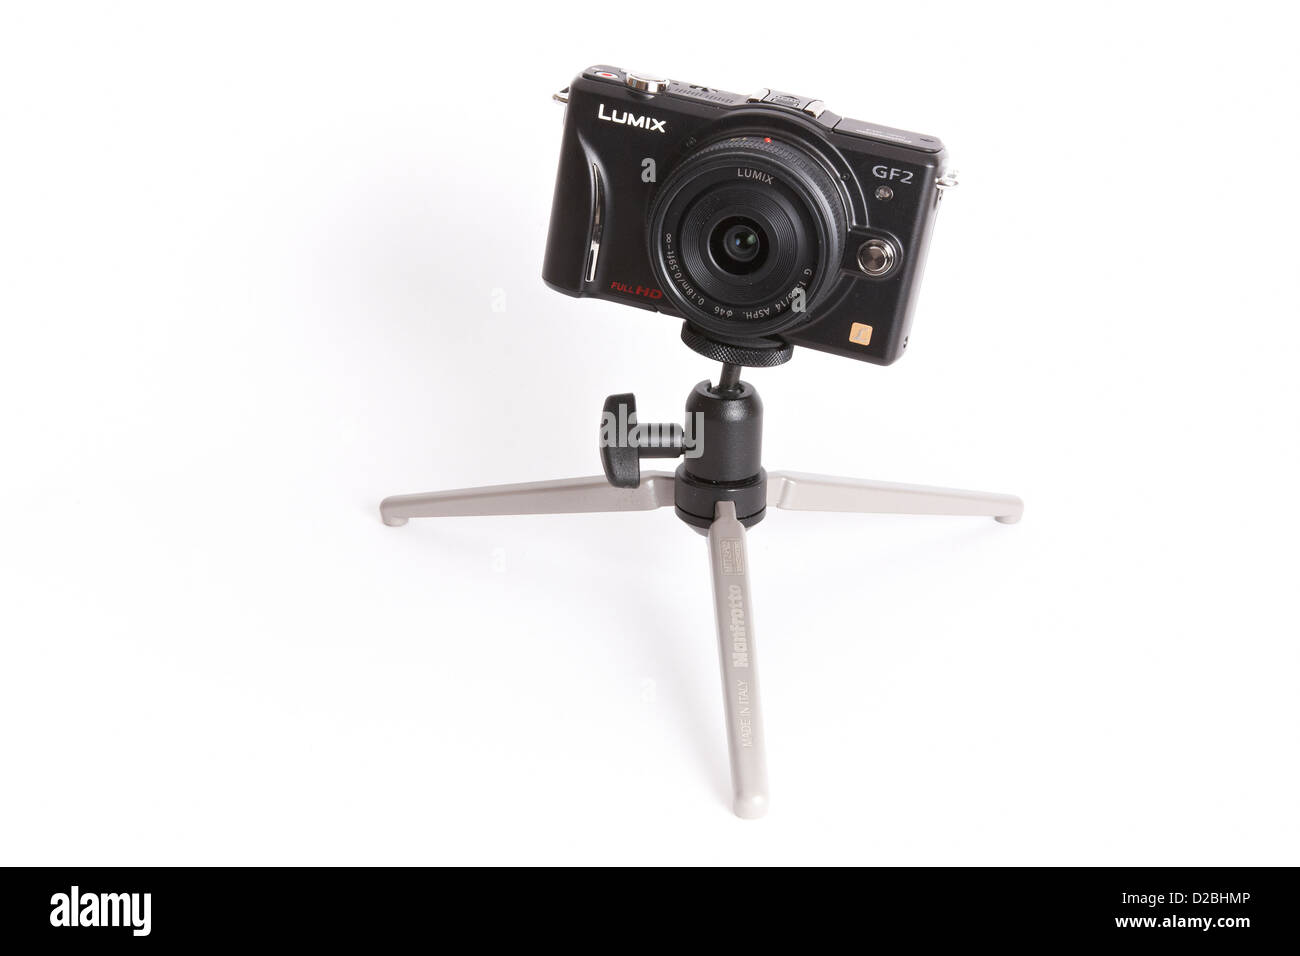 Panasonic Lumix GF2 Digitalkamera auf einem Mini Manfrotto Stativ  Stockfotografie - Alamy